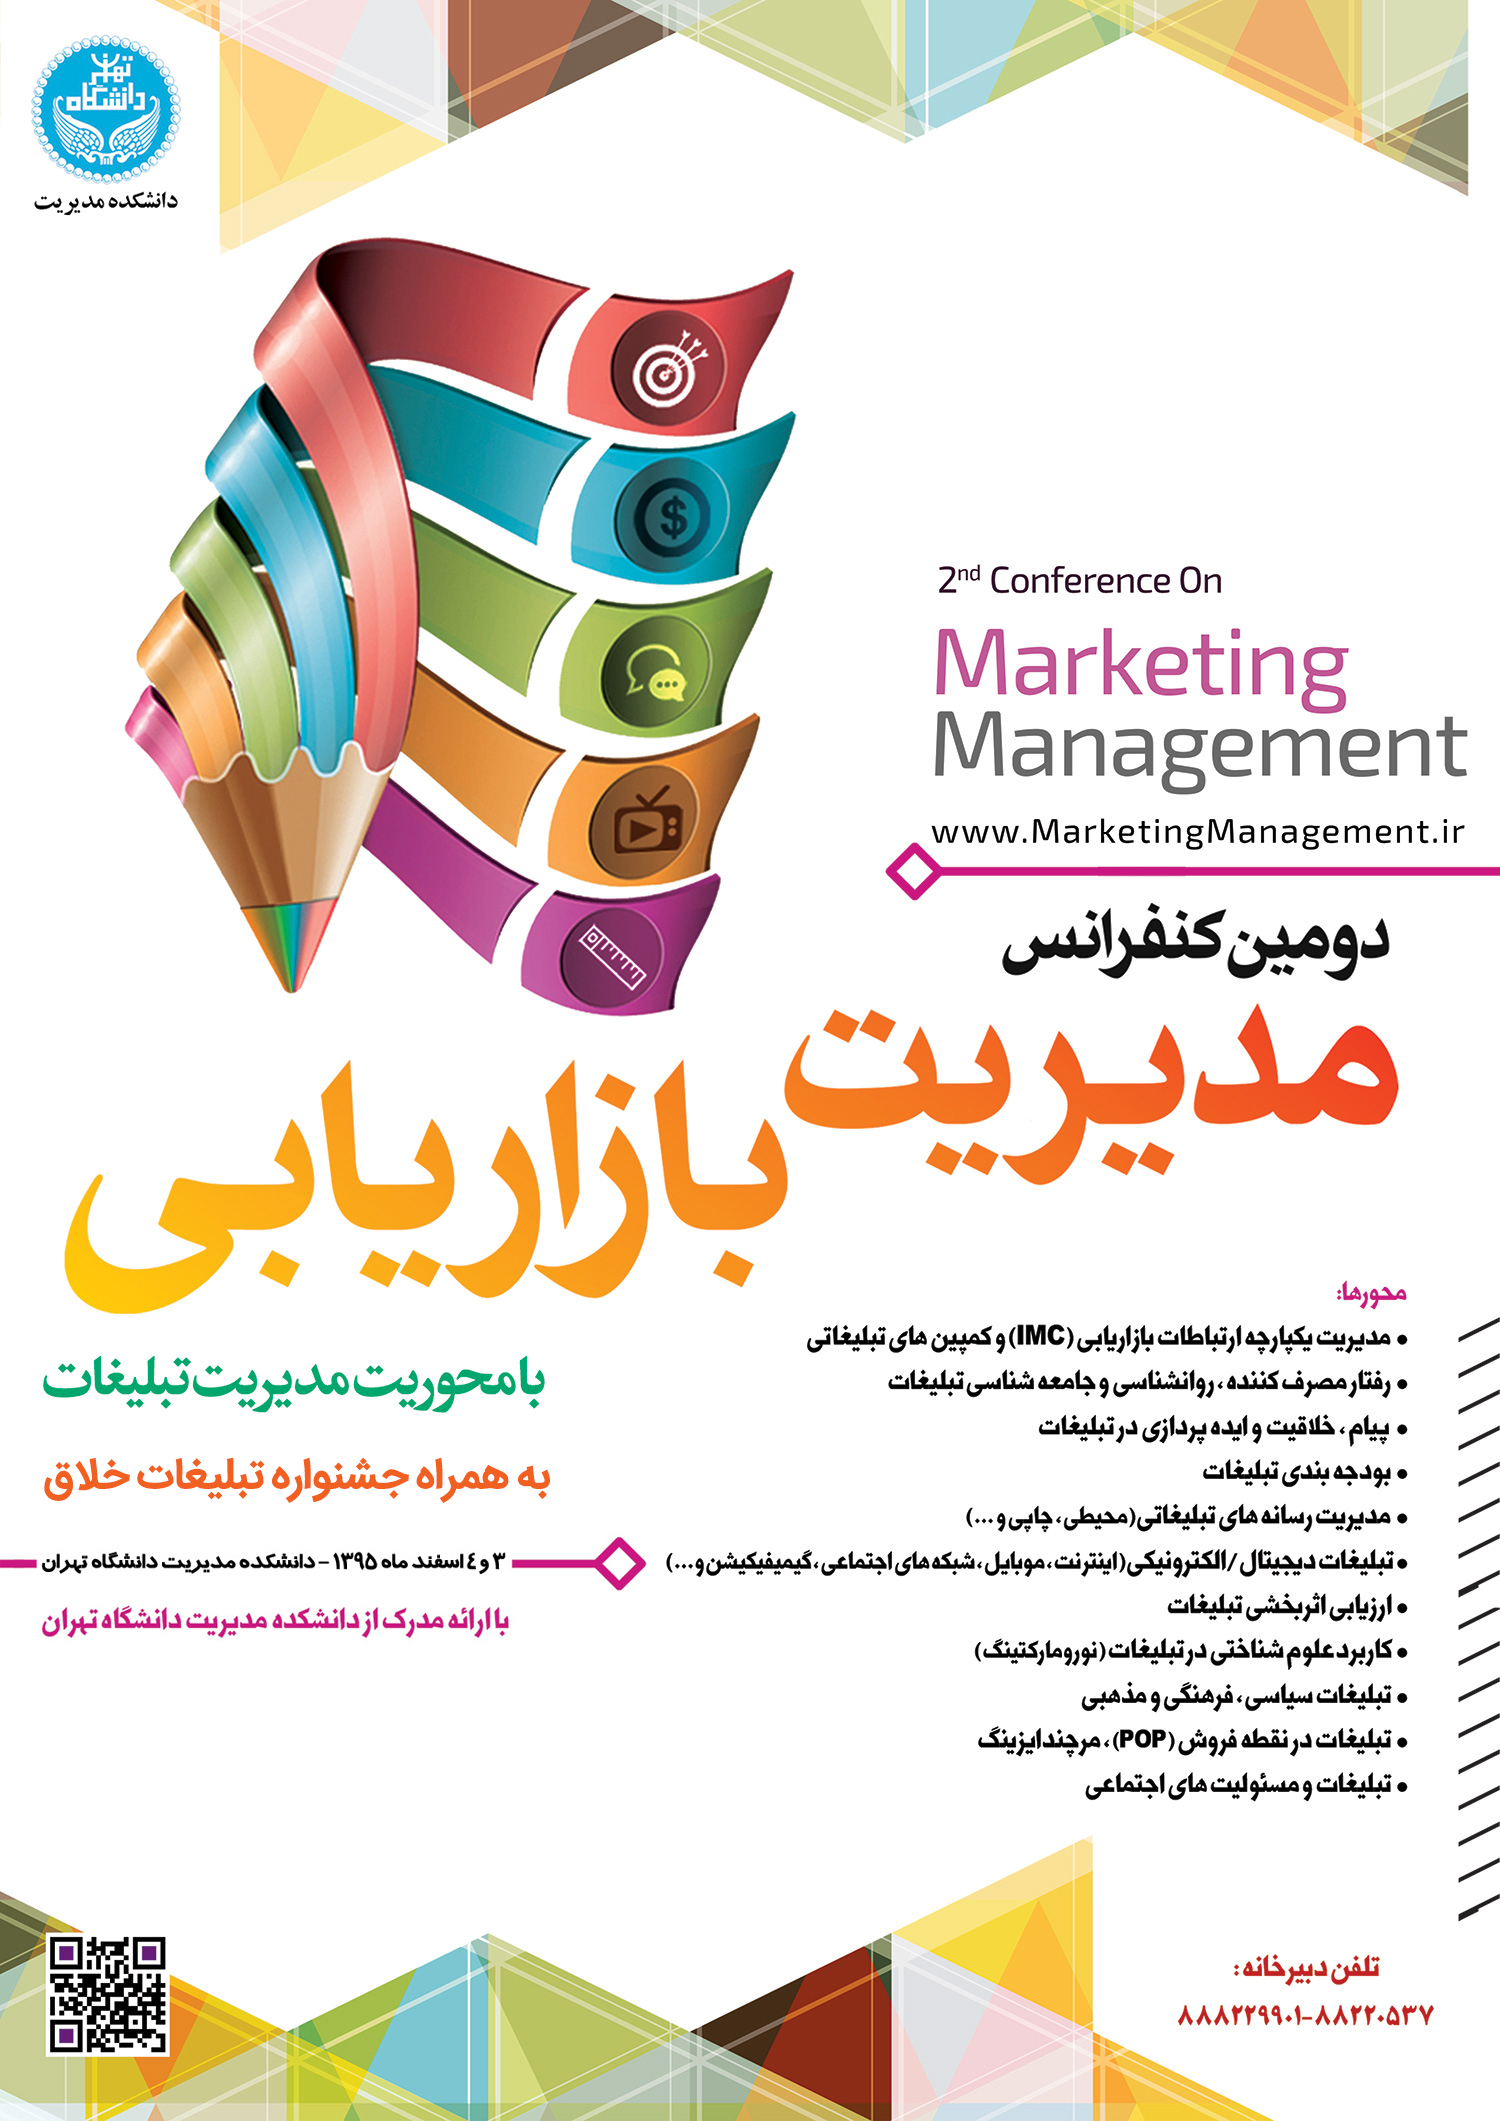 دومین کنفرانس مدیریت بازاریابی